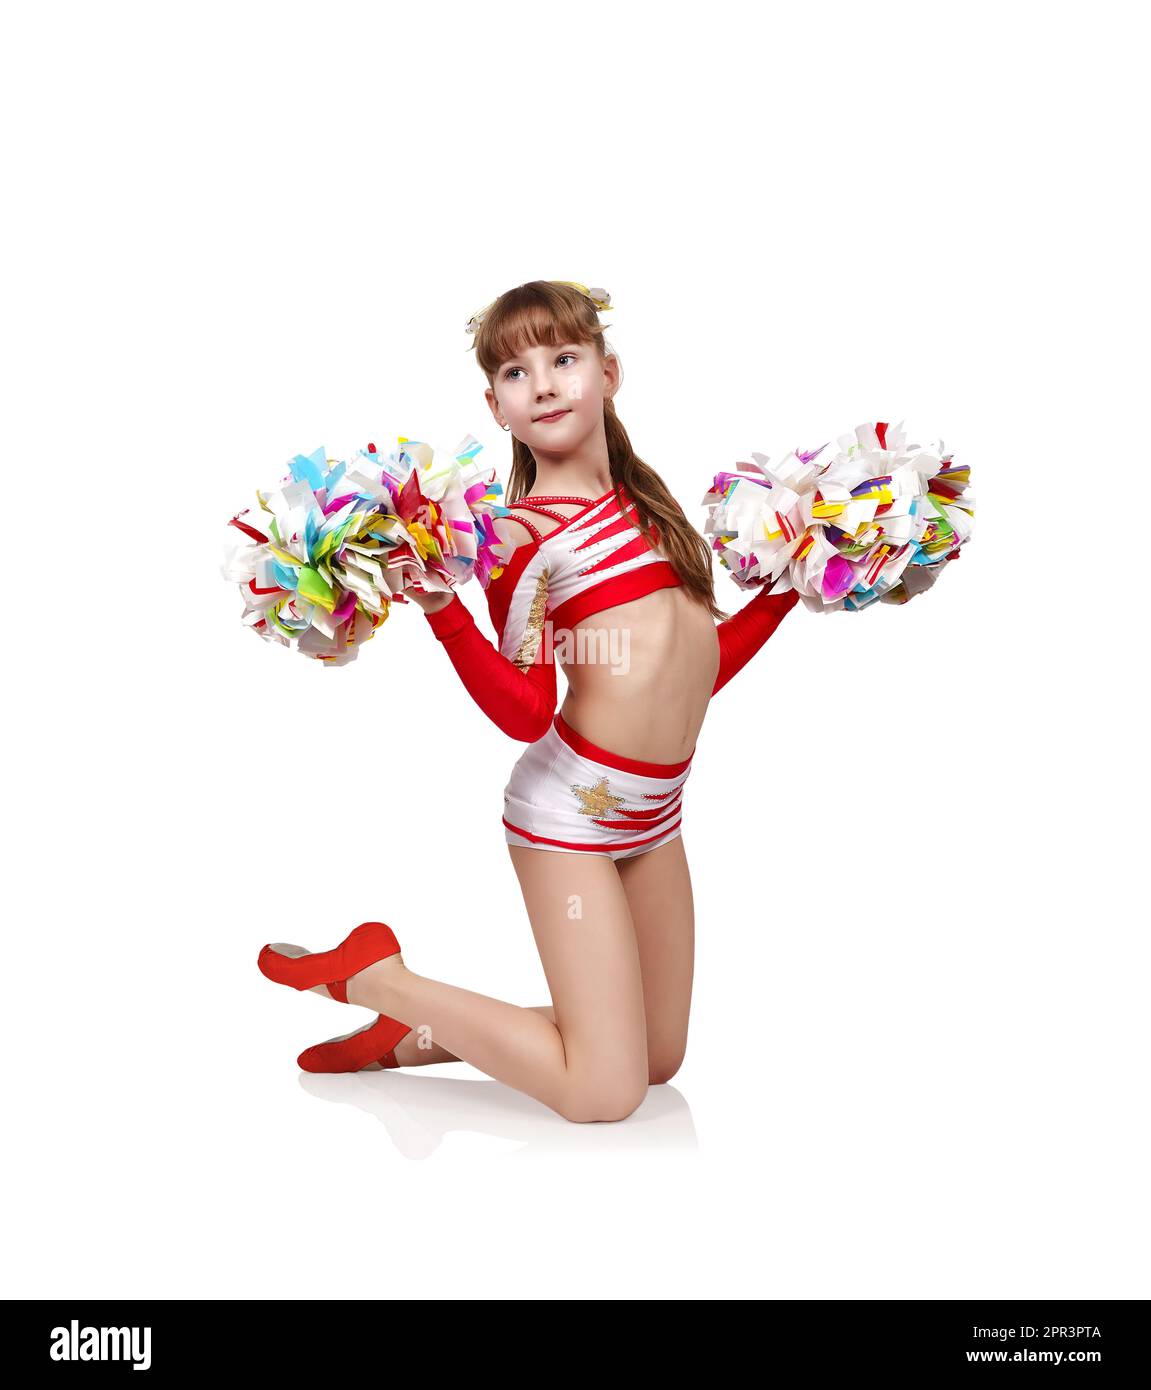 Young cheerleader girl in uniform kneeling with pompons Stock Photo - Alamy